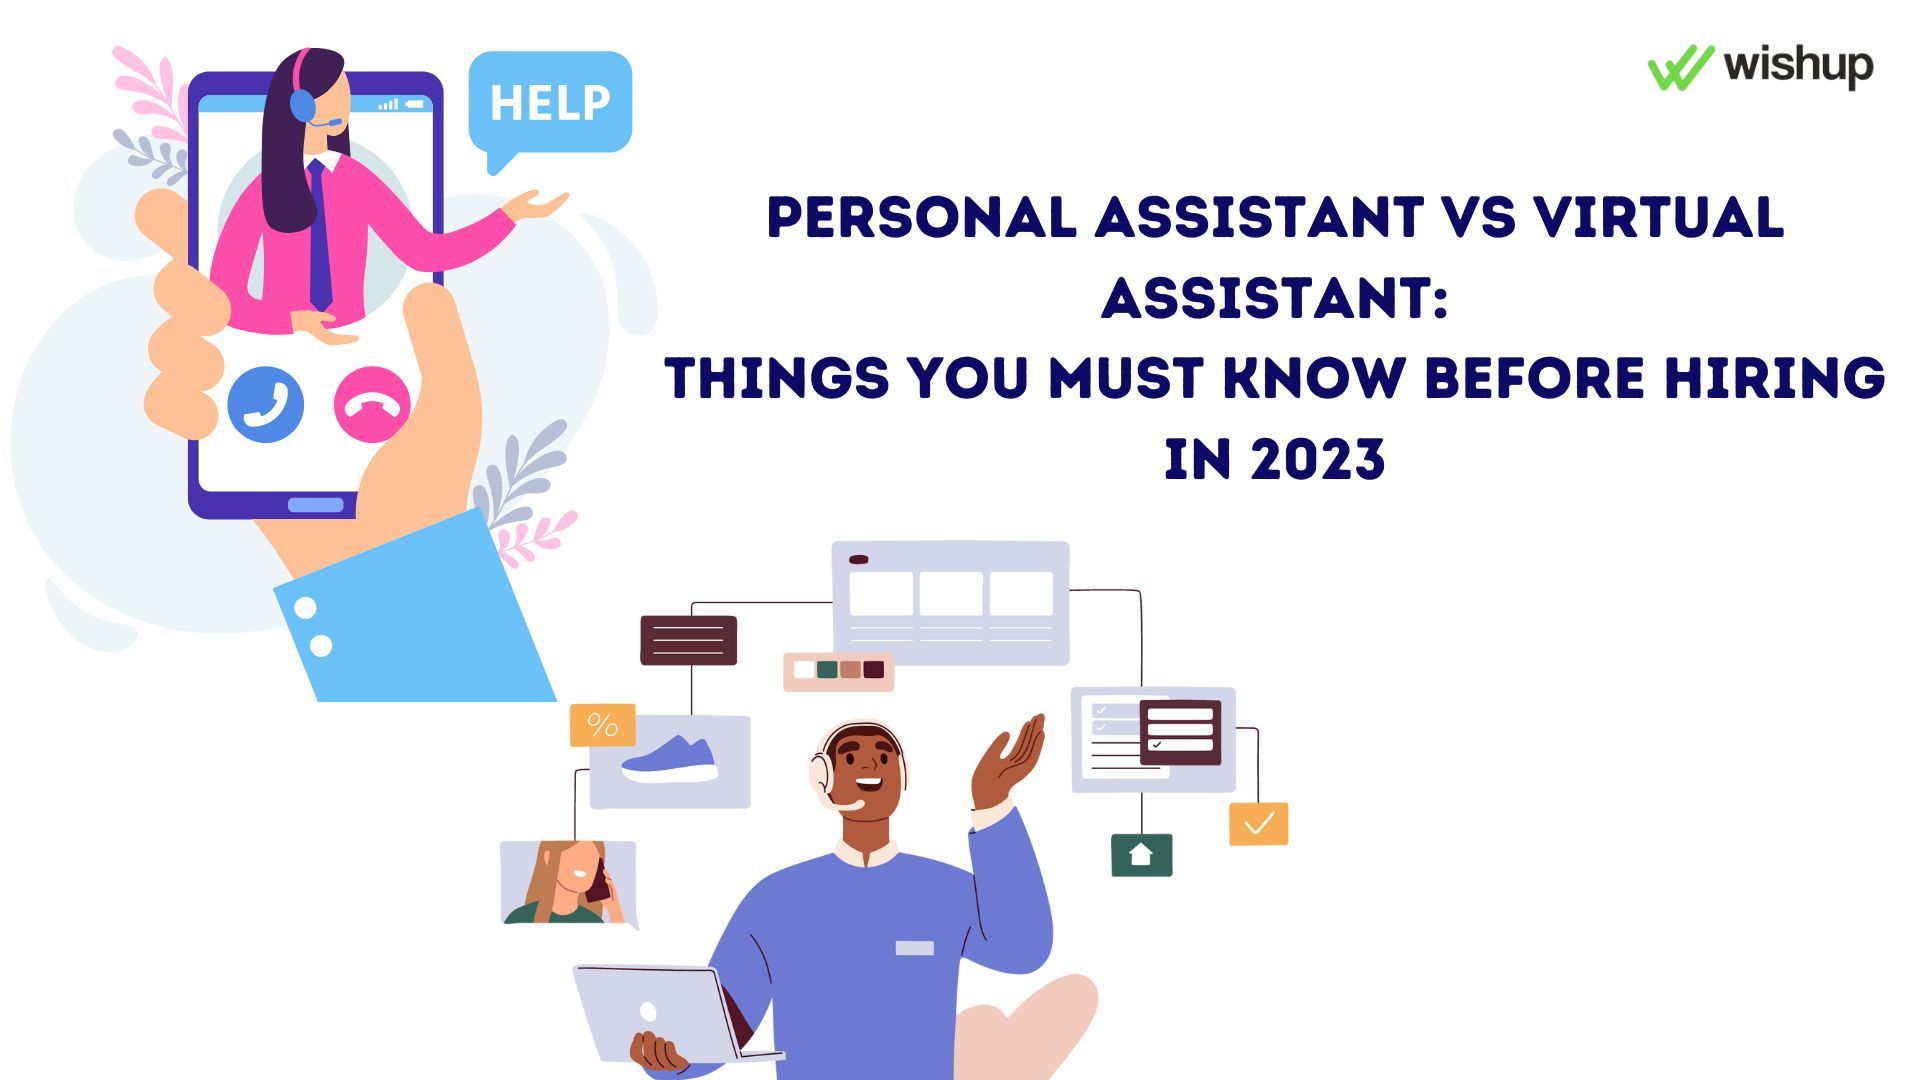 Personal Assistant VS Virtual Assistant